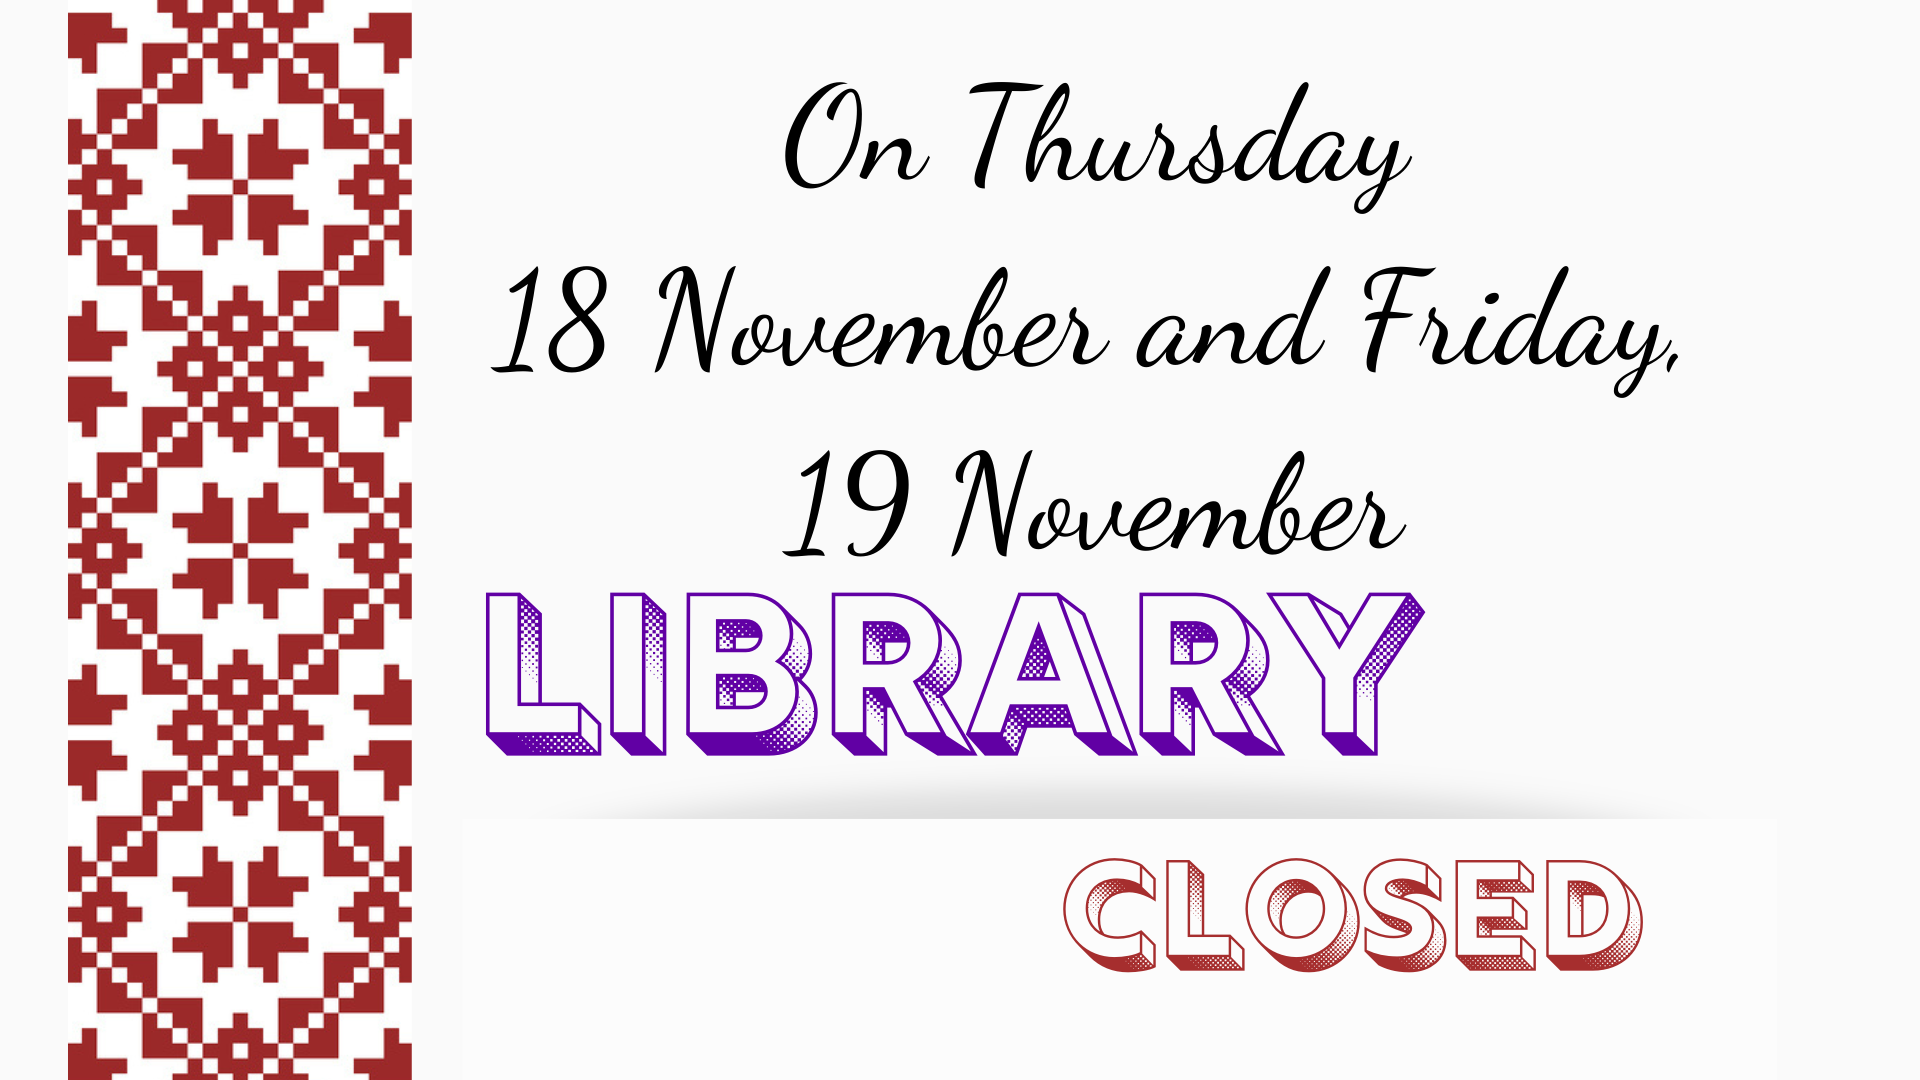 On Thursday 18 November and Friday, 19 November library closed.